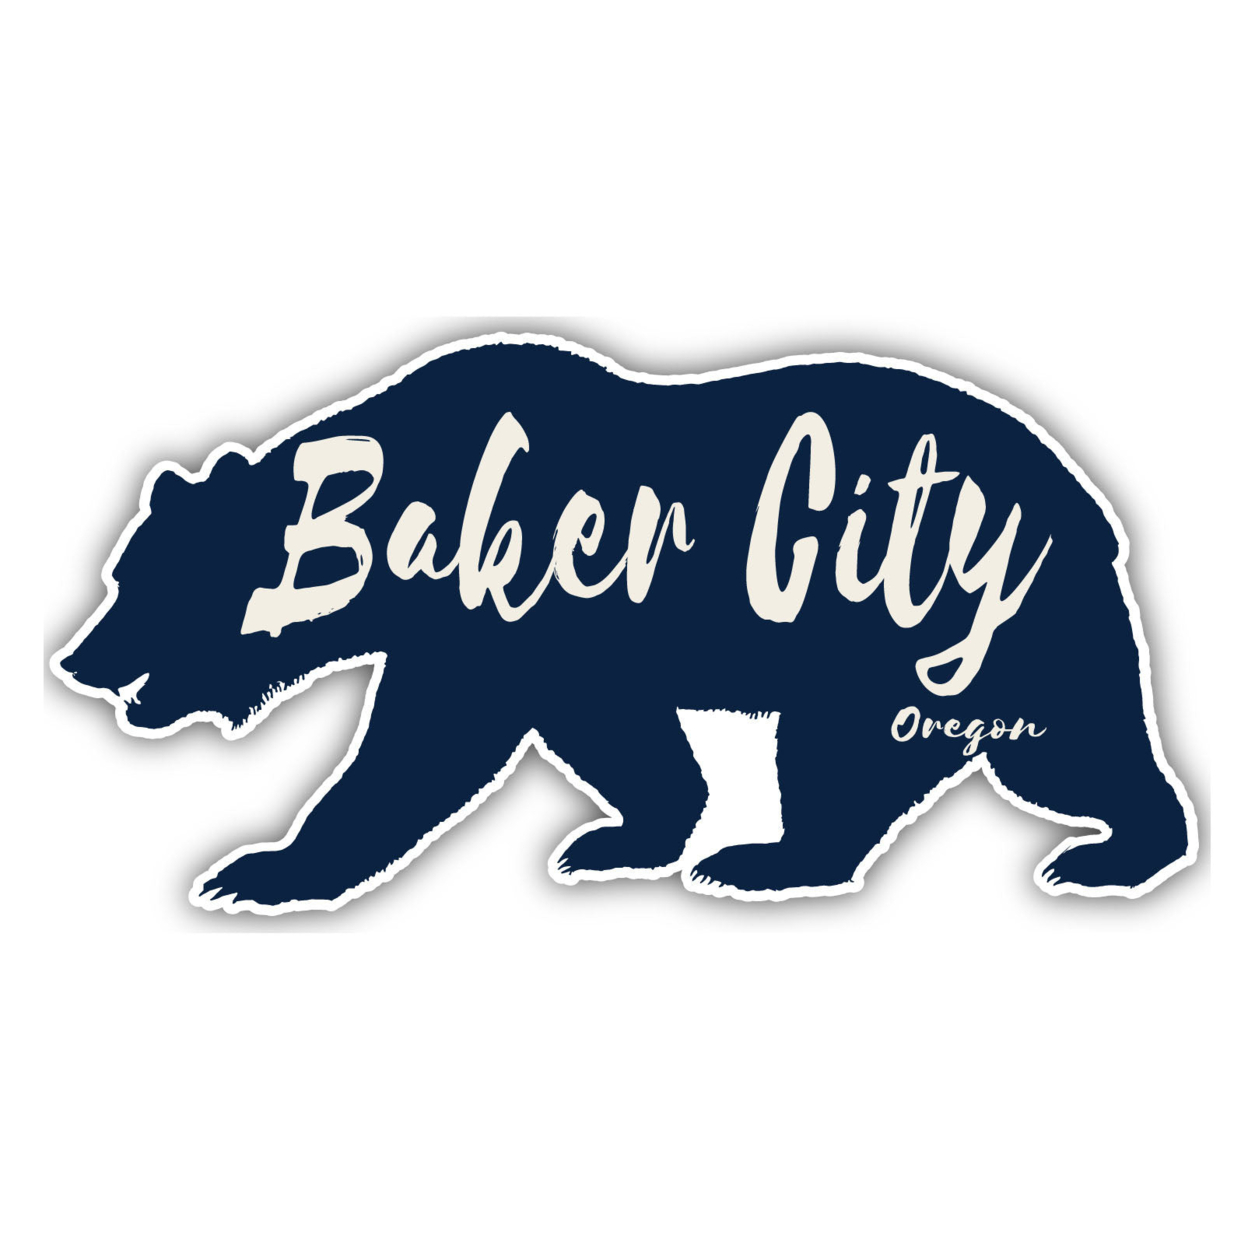 Baker City Oregon Souvenir Decorative Stickers (Choose Theme And Size) - Single Unit, 10-Inch, Adventures Awaits